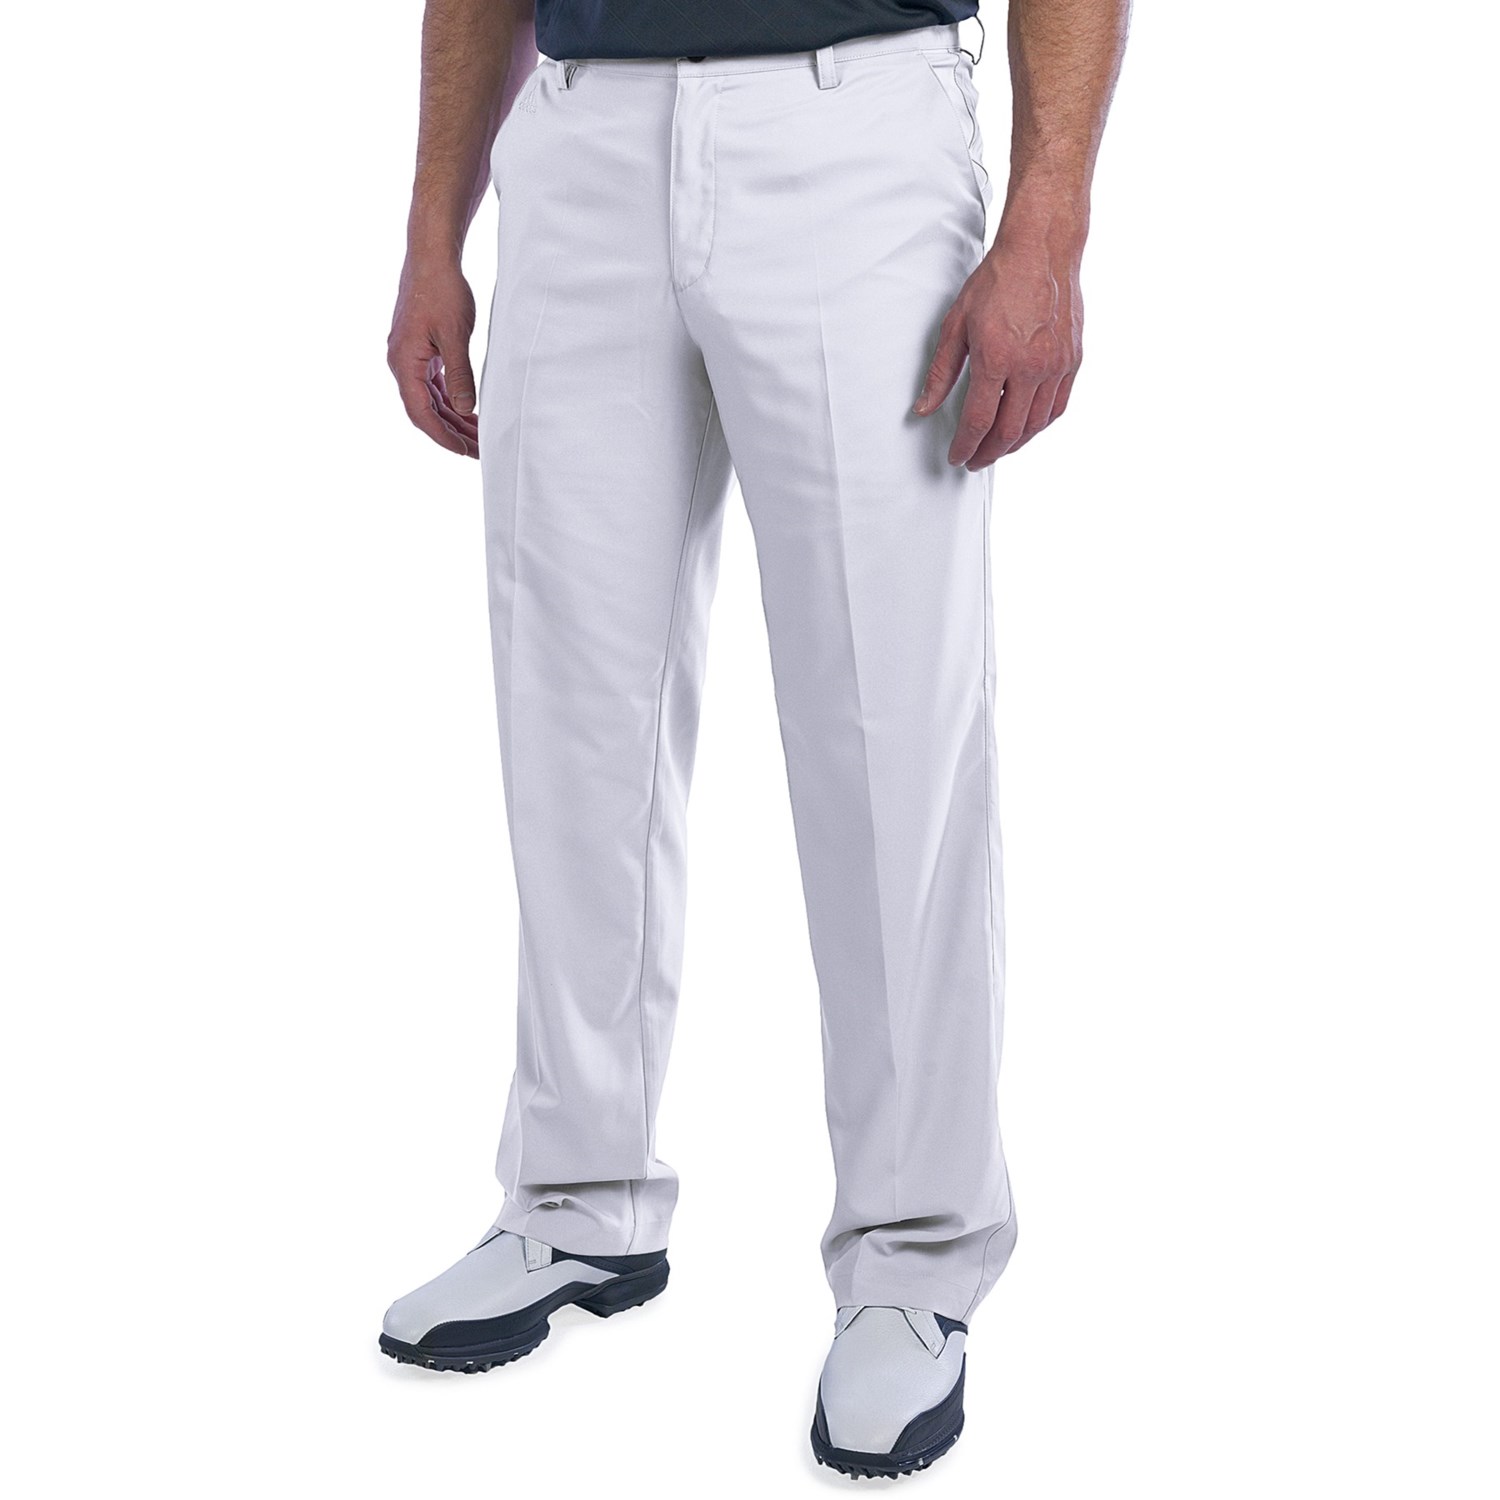 Adidas Golf ClimaLite 3-Stripes Pants (For Men) - Save 59%